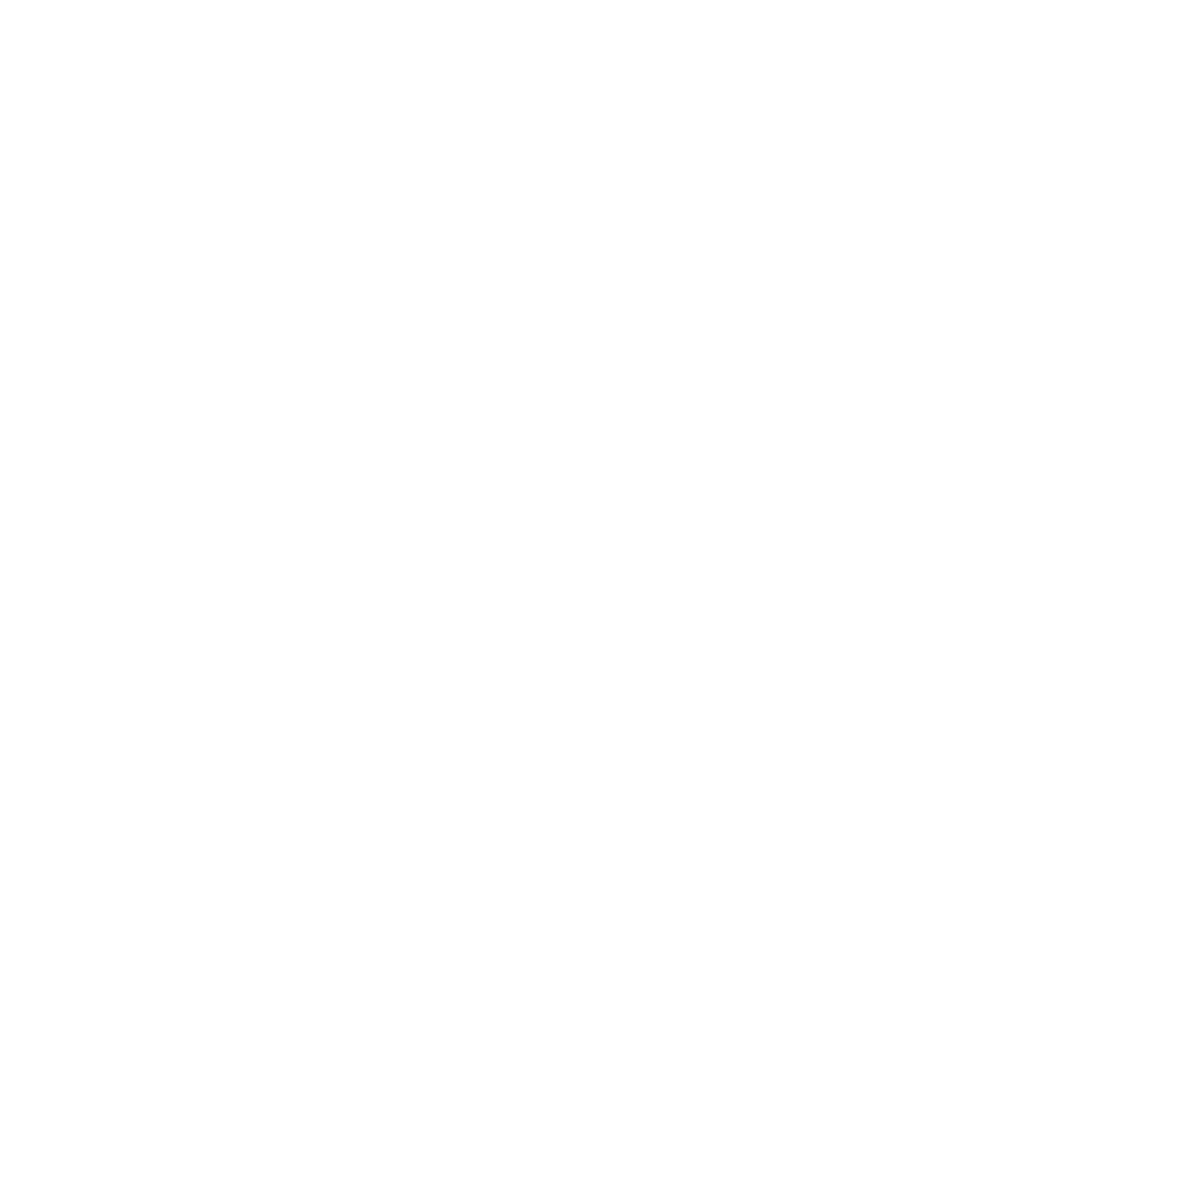 Grace Community Baptist Church